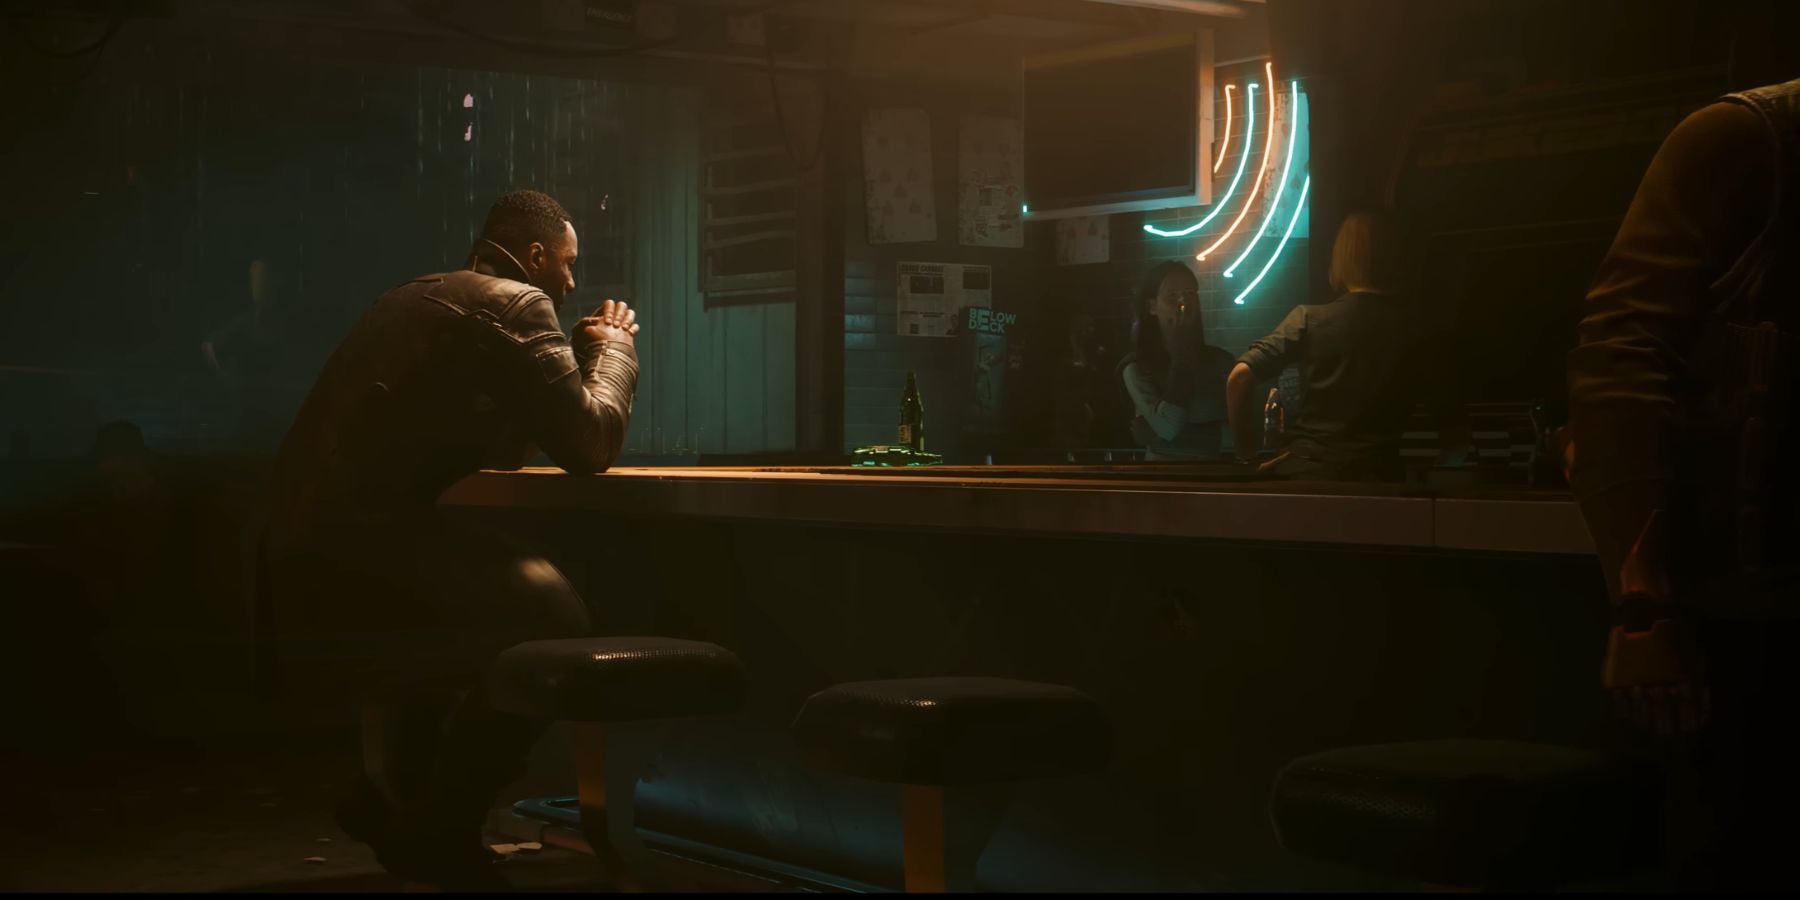 Cyberpunk 2077: Phantom Liberty Expansion Adds Idris Elba to
the Cast